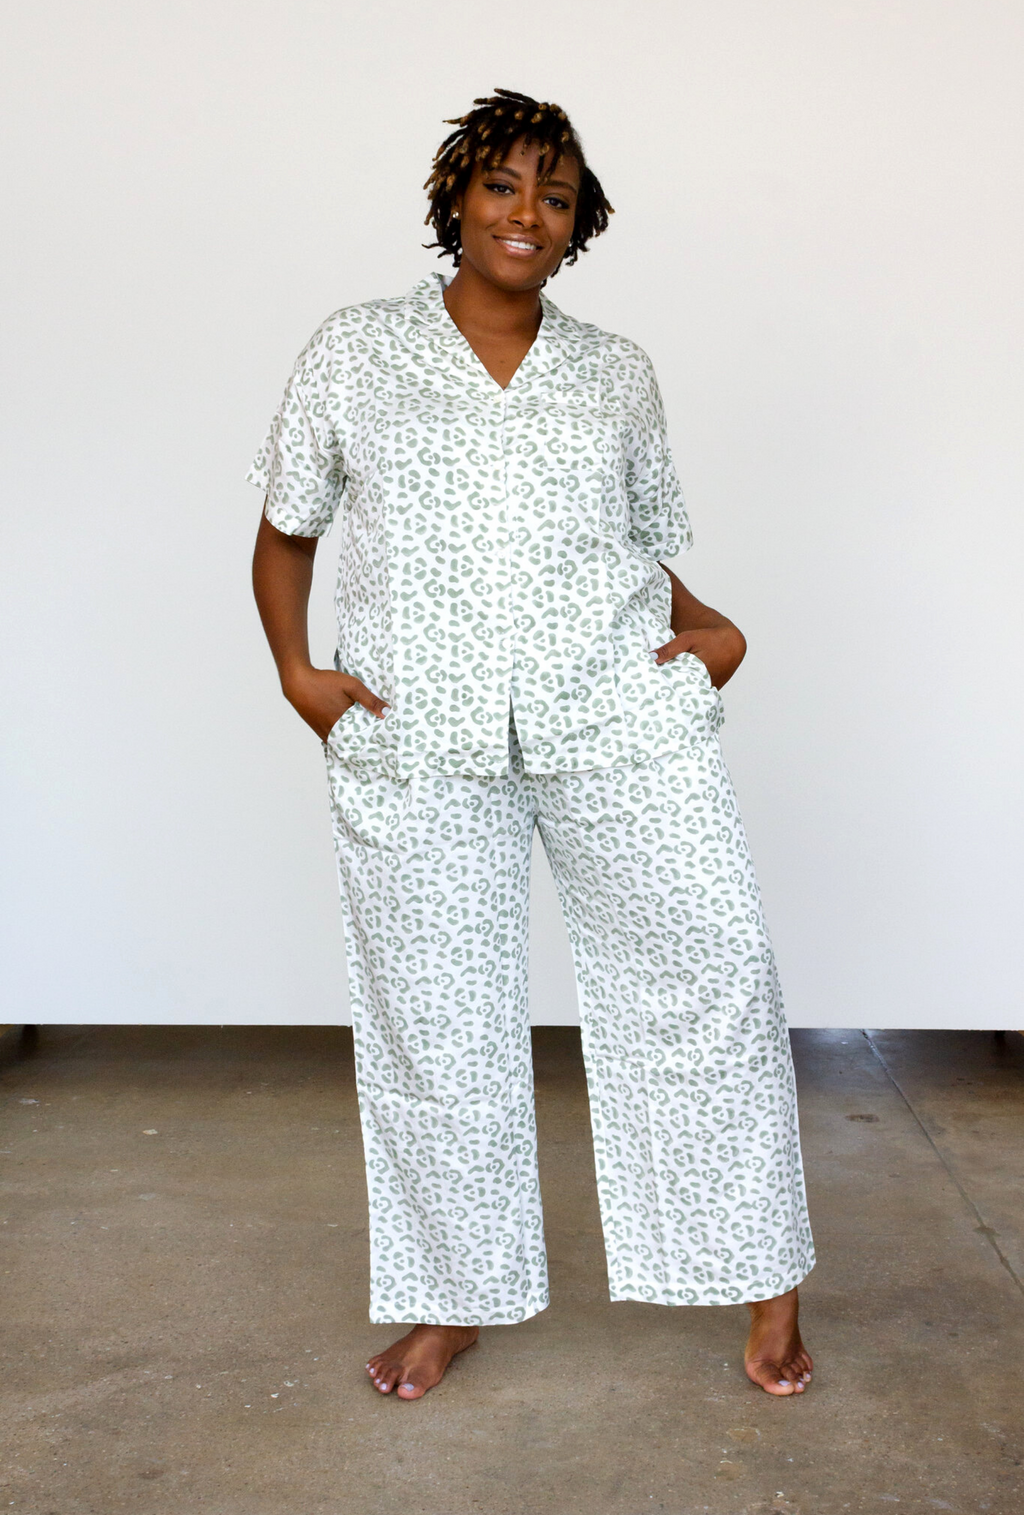 Leopard Pajama Modal Set in Cream + Sage